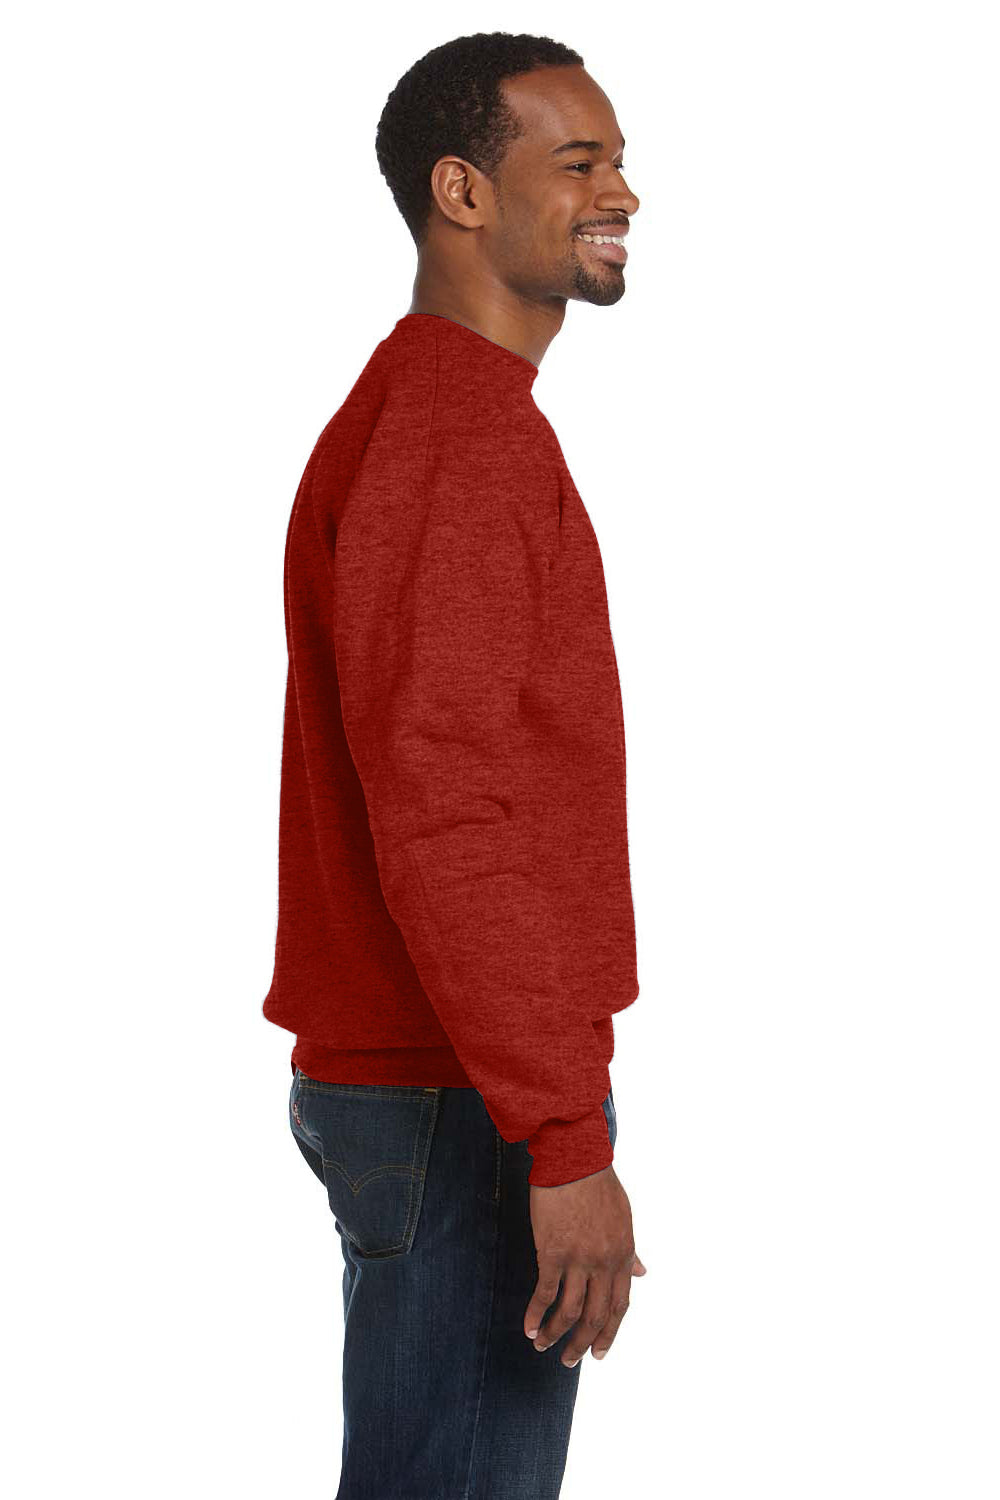 Hanes P160 EcoSmart Print Pro XP Fleece Crewneck Sweatshirt Heather Red Pepper Side